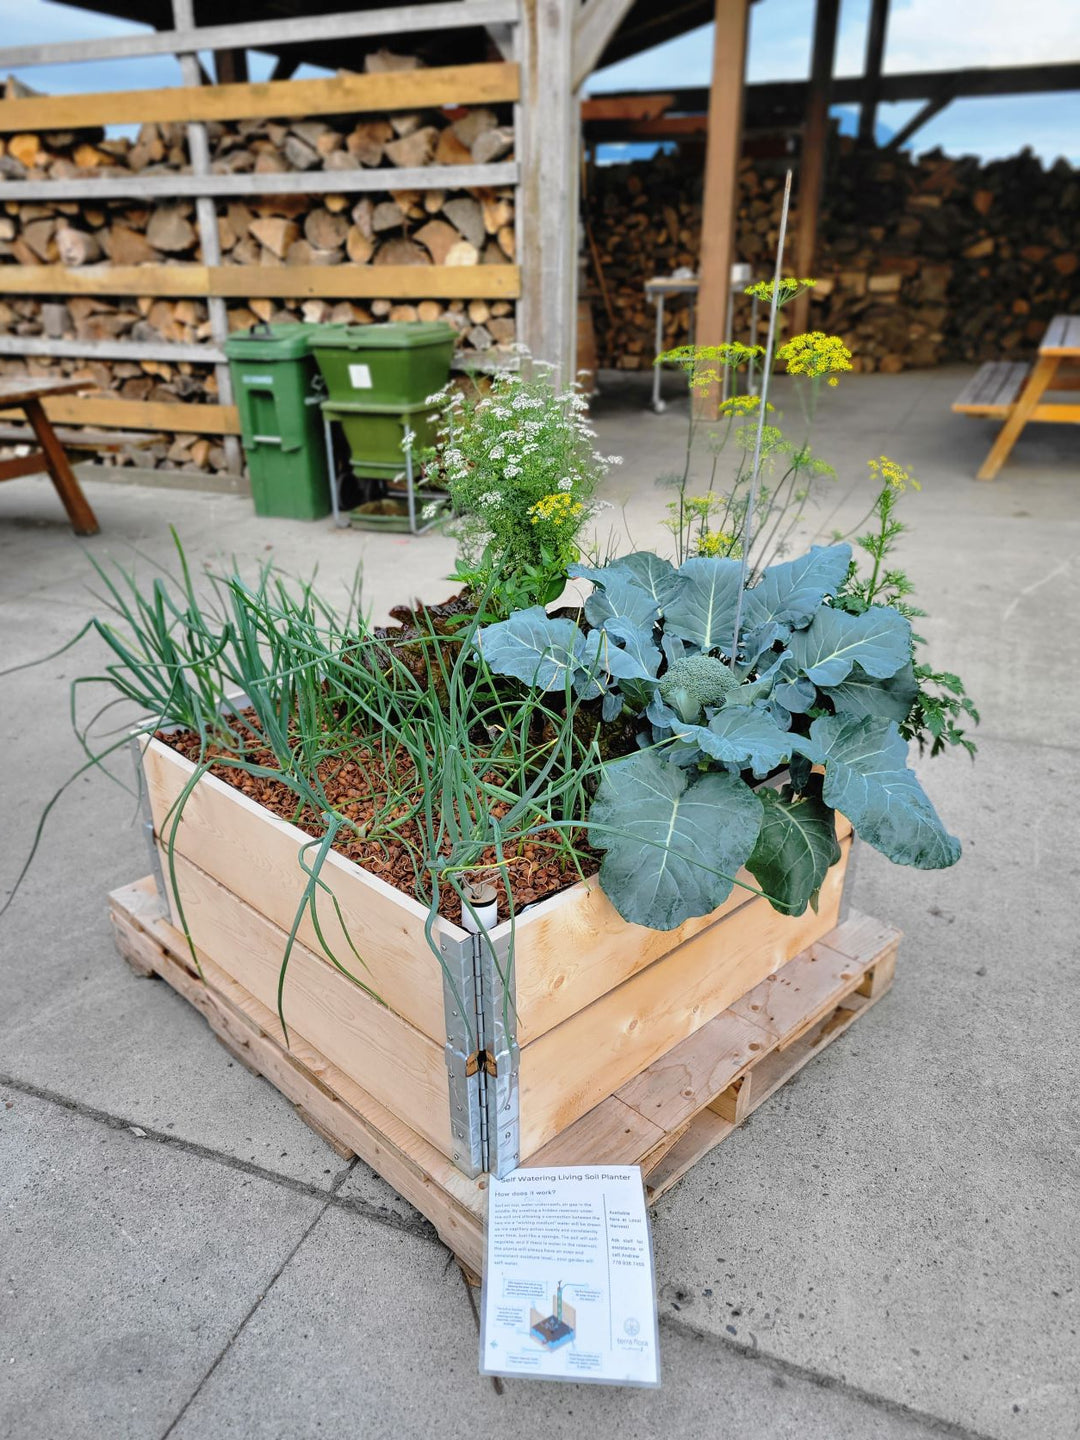 Project Garden Box - Self-Watering Garden Kit